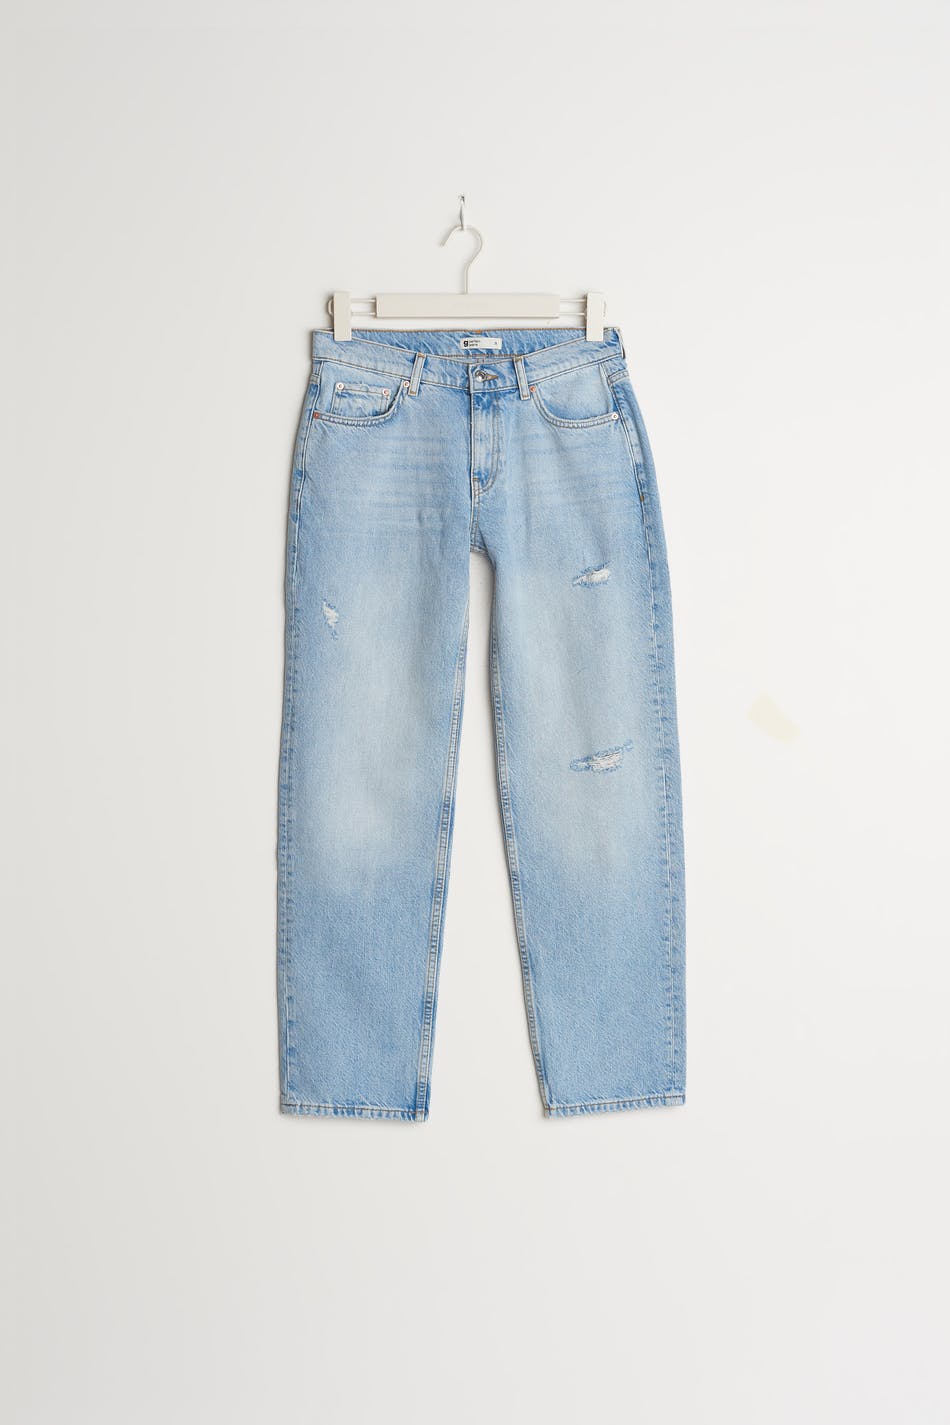 Gina Tricot 90s petite low waist jeans 36  Lt blue